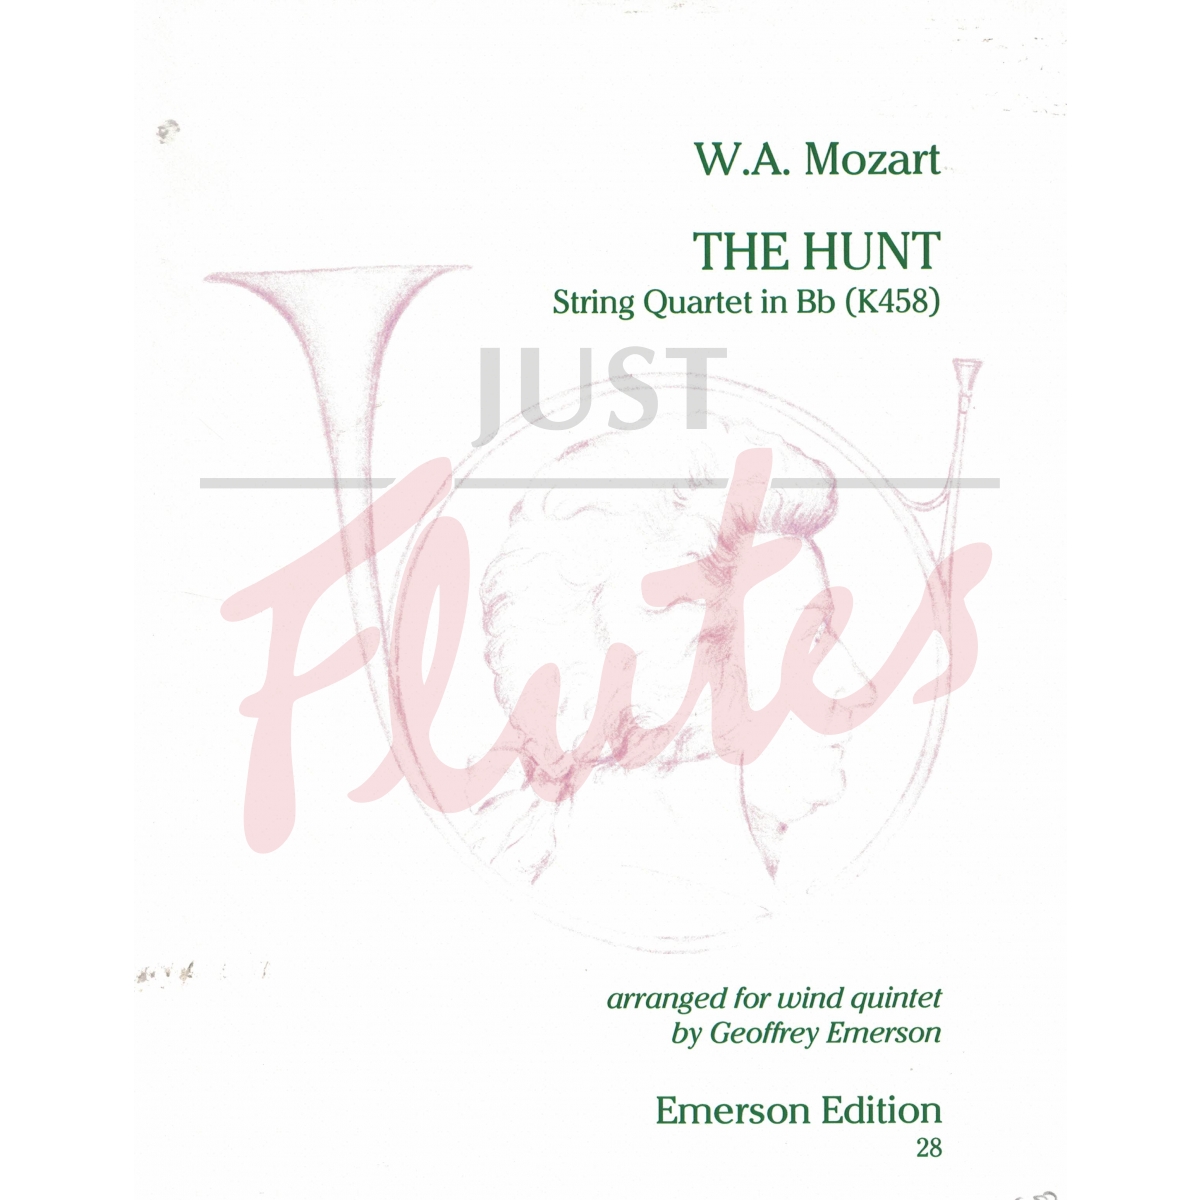 The Hunt arranged for Wind Quintet from String Quartet 